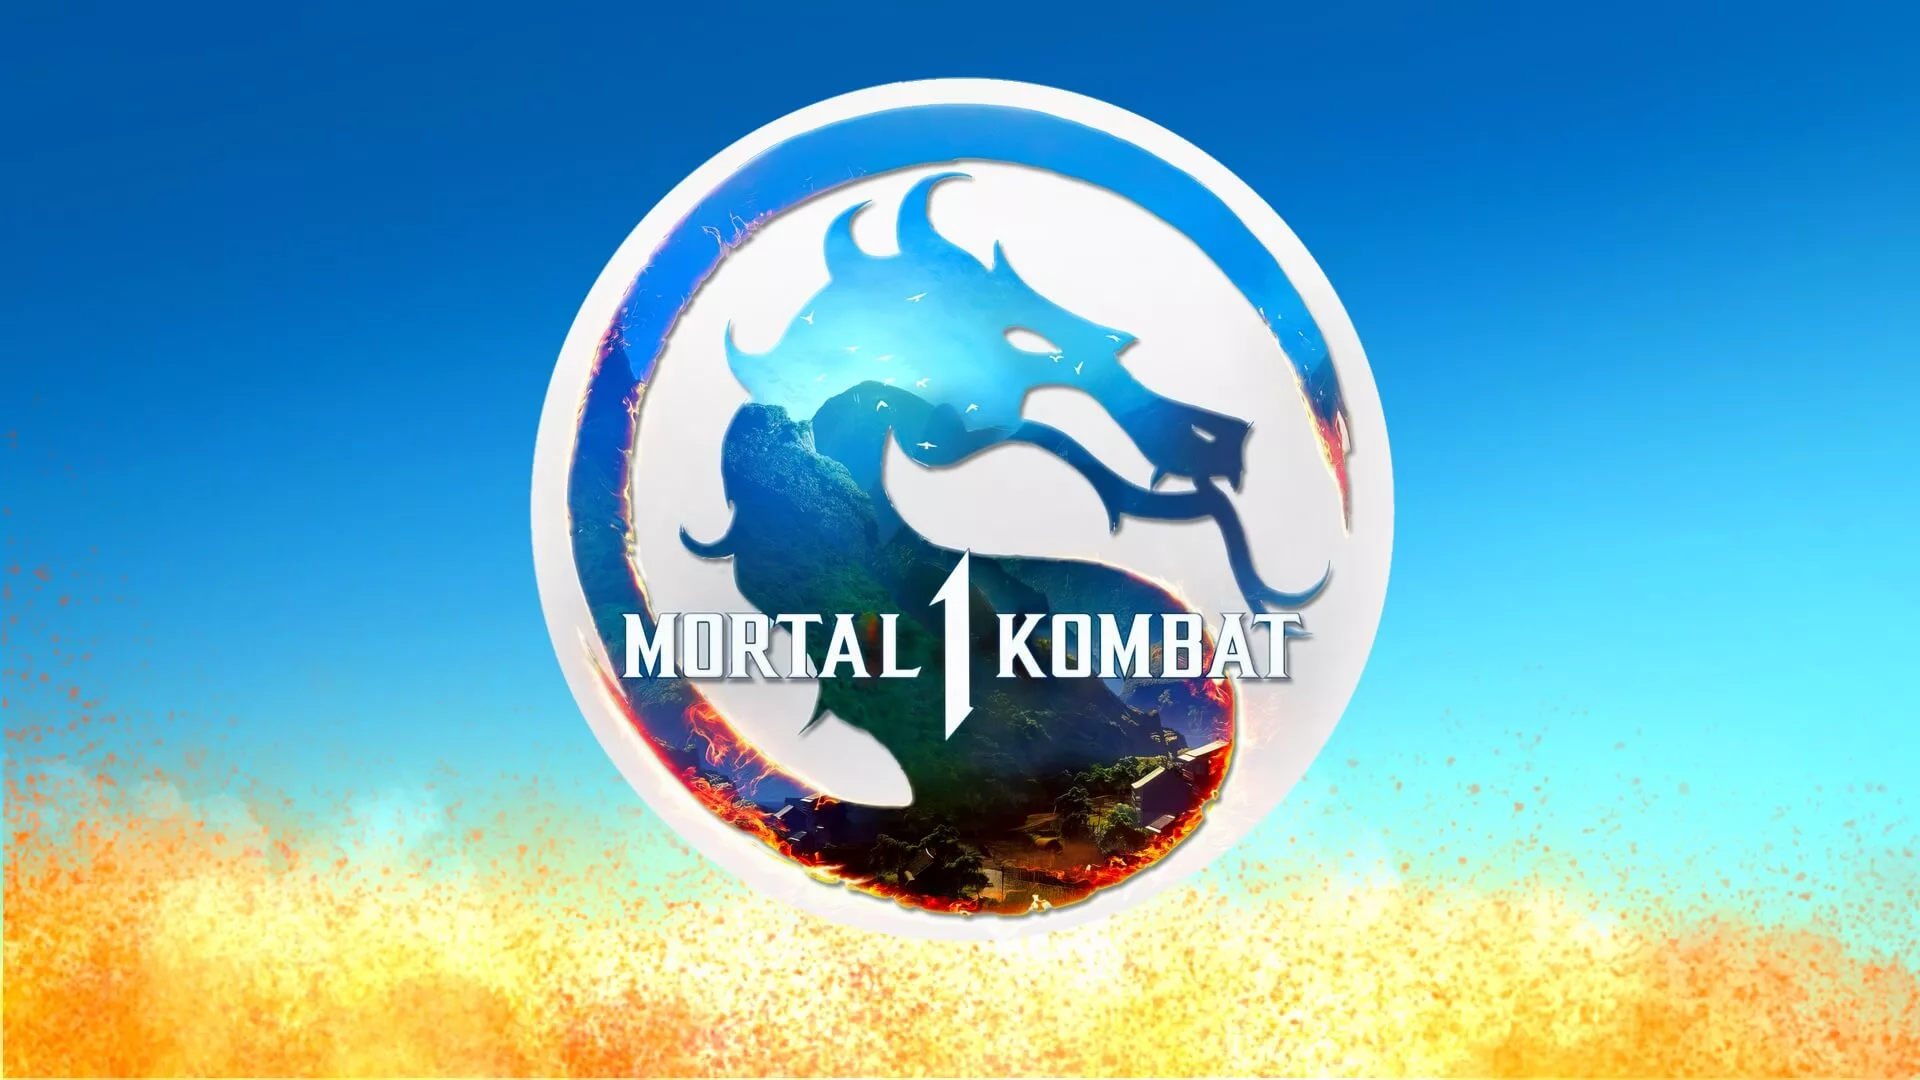 Mortal Kombat 1 Pro Kompetition abre inscrições em São Paulo